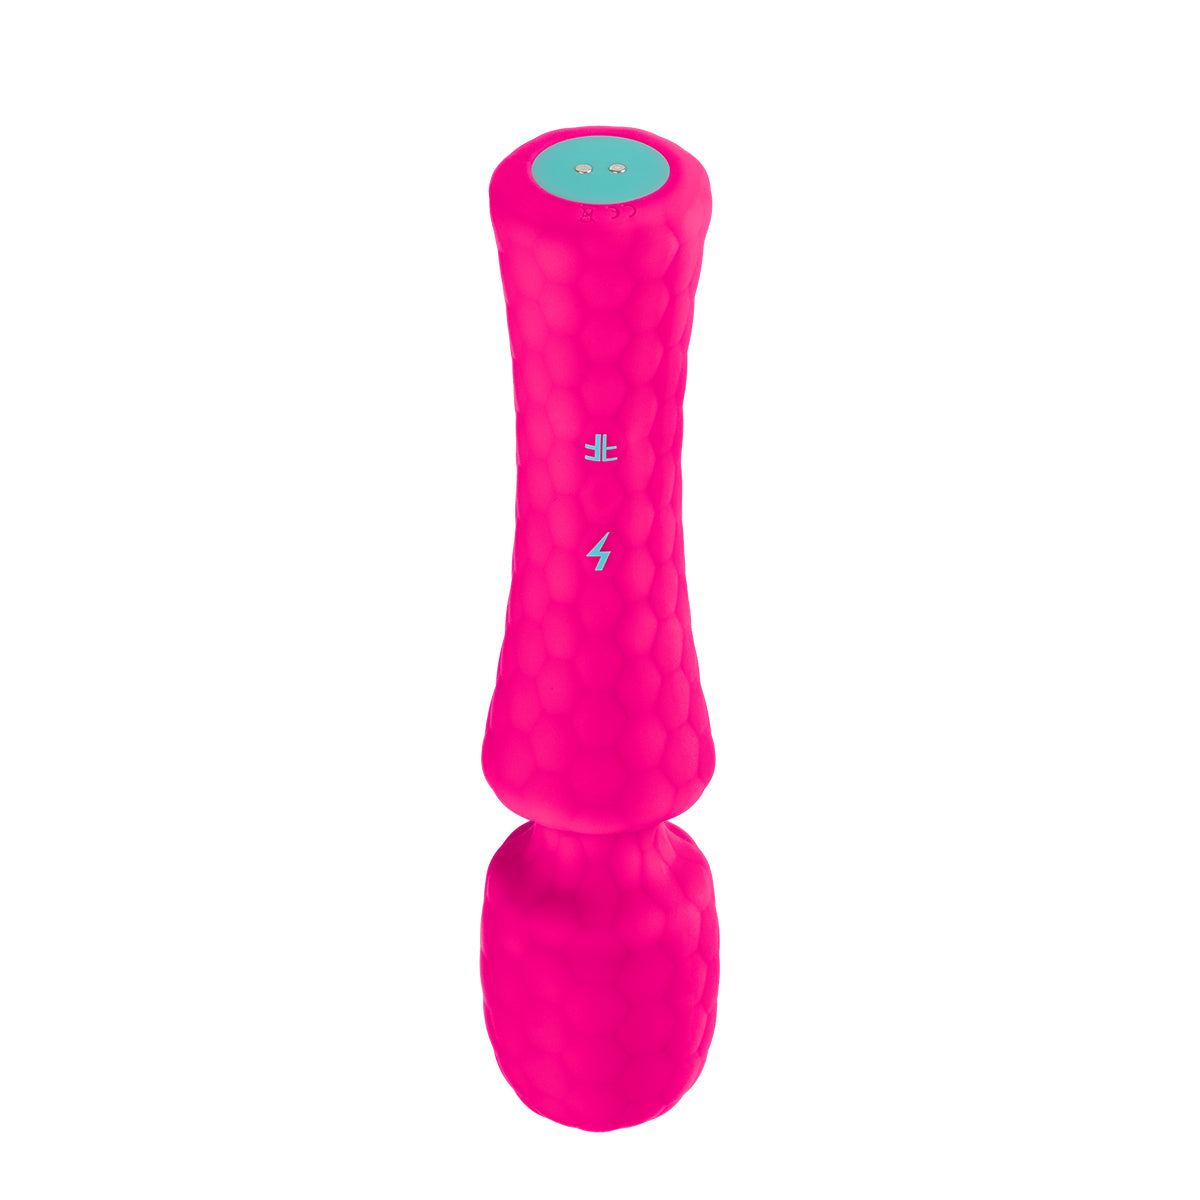 FemmeFunn Ultra Wand Rechargeable Flexible Textured Silicone Vibrator Pink - Zateo Joy